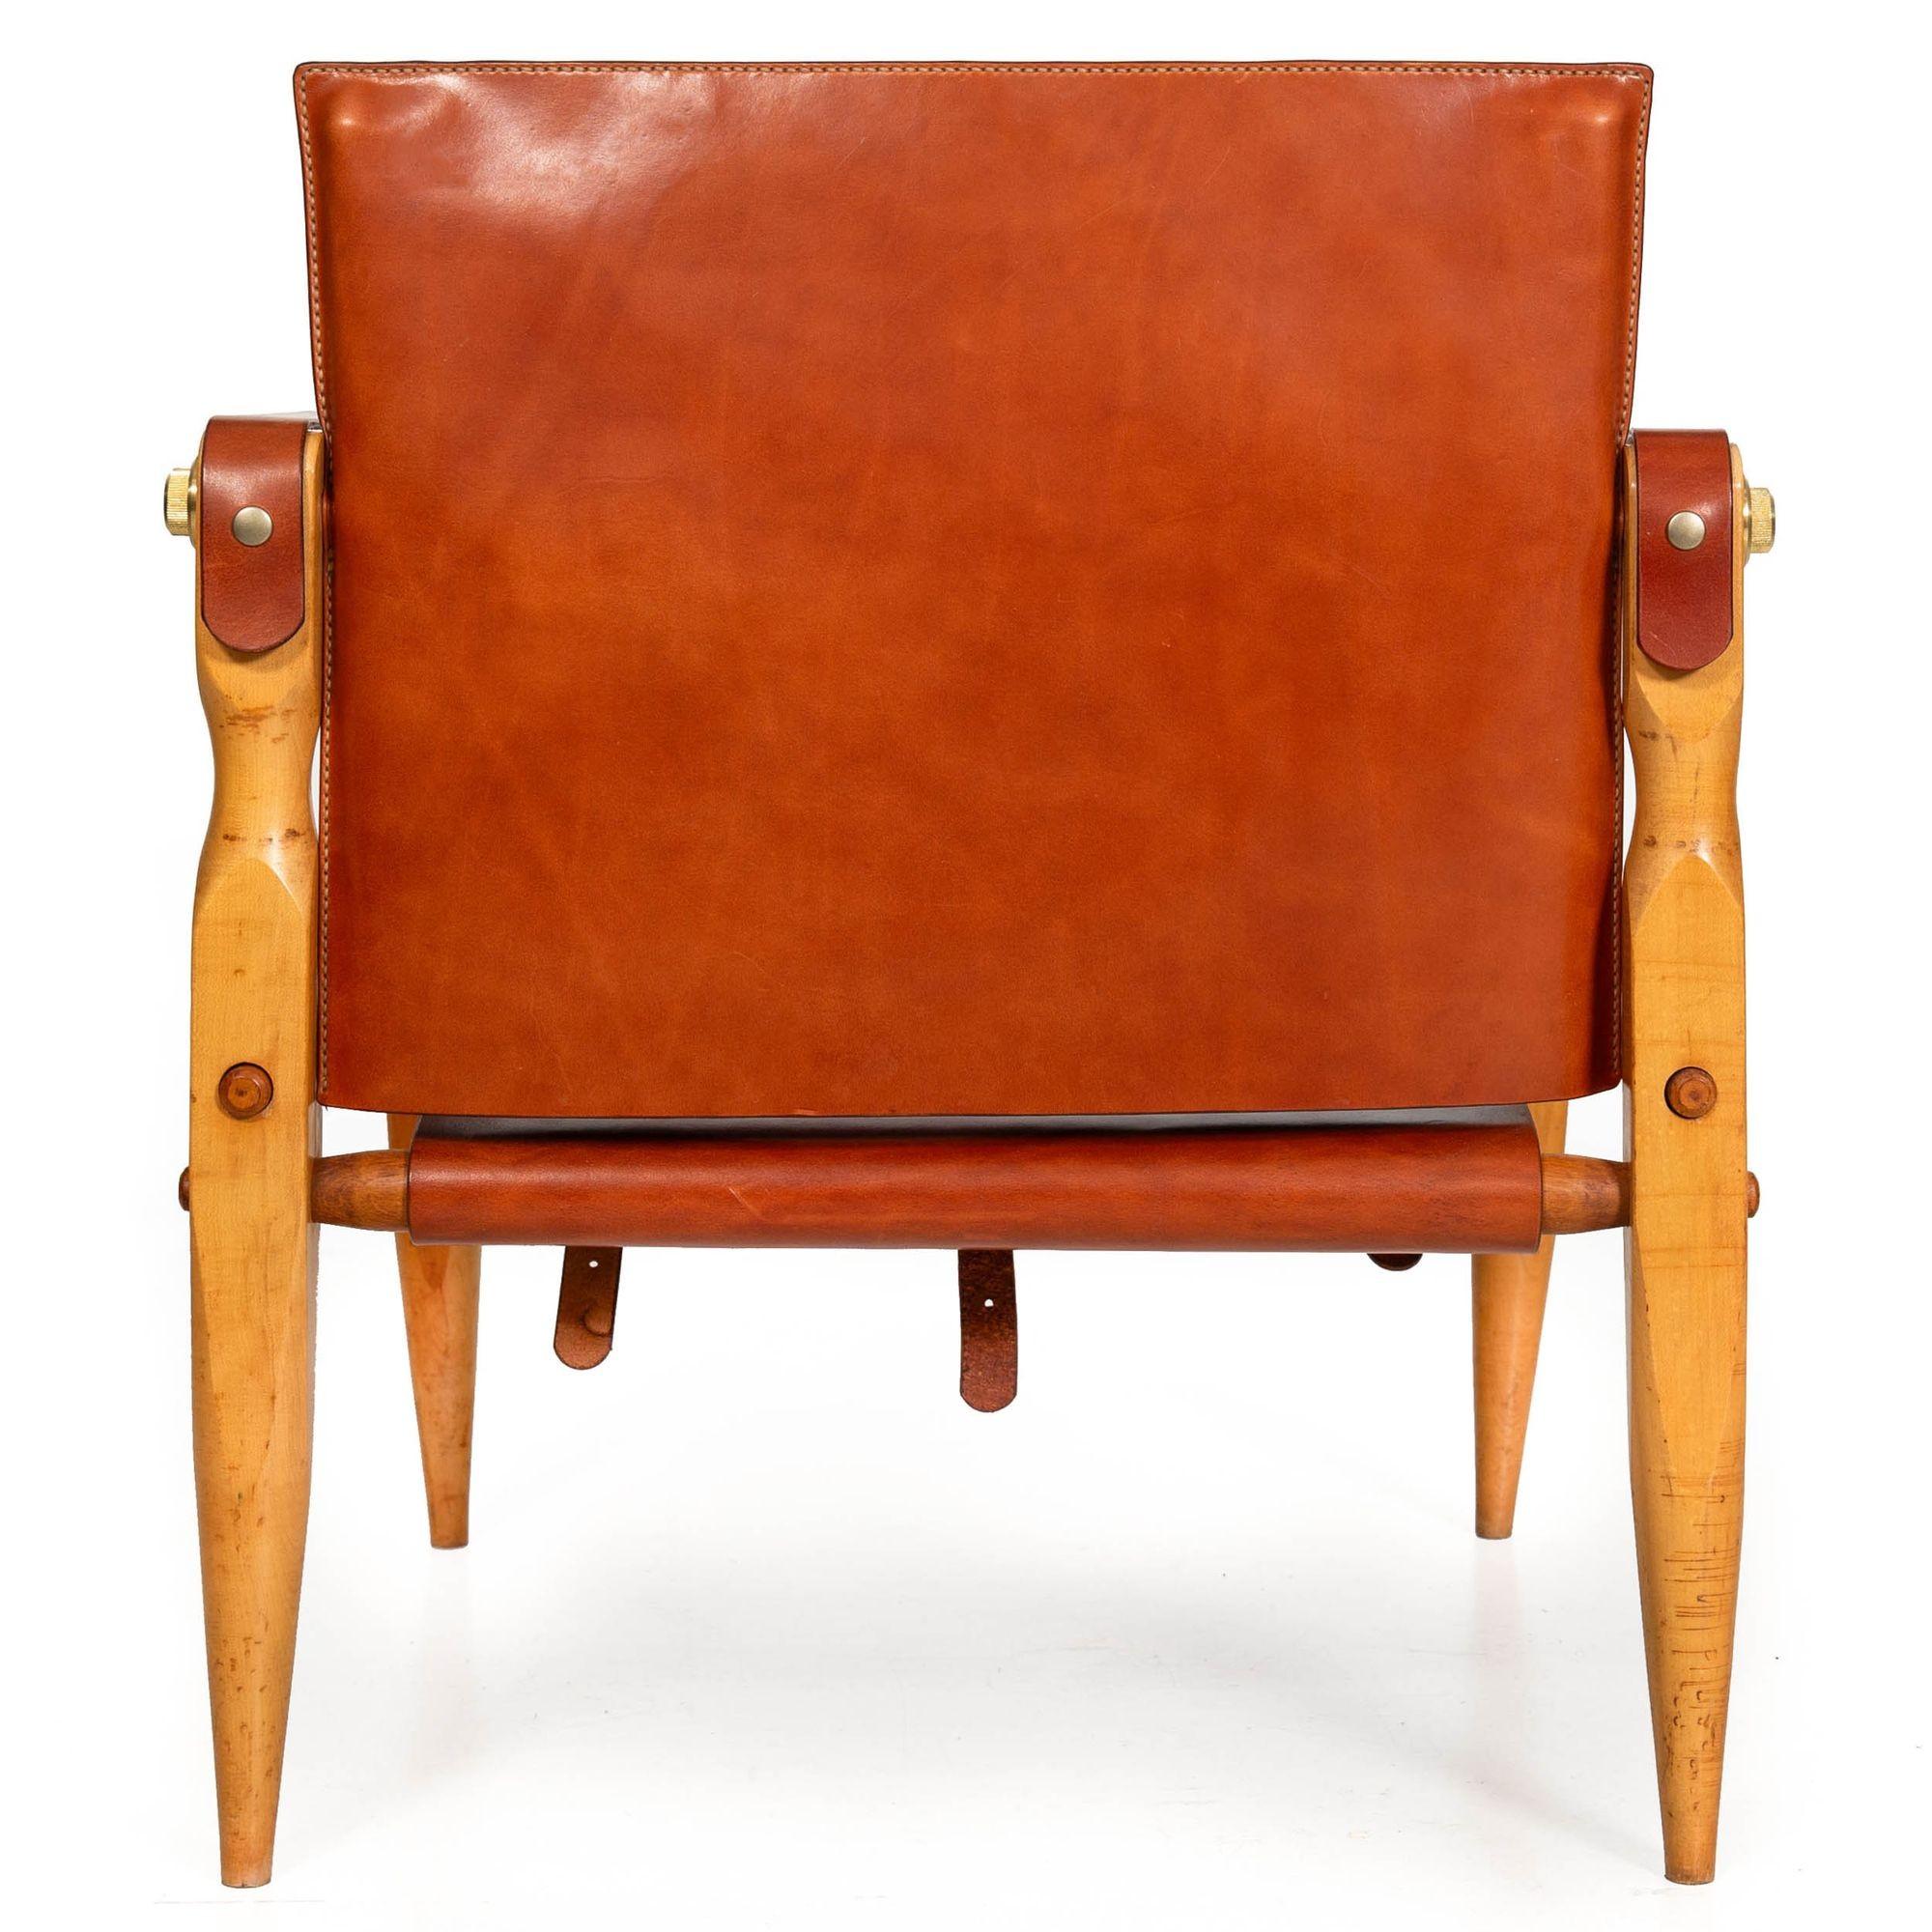 European Gorgeous Circa 1970s Mid-Century Modern “Safari” Chair in New Leather